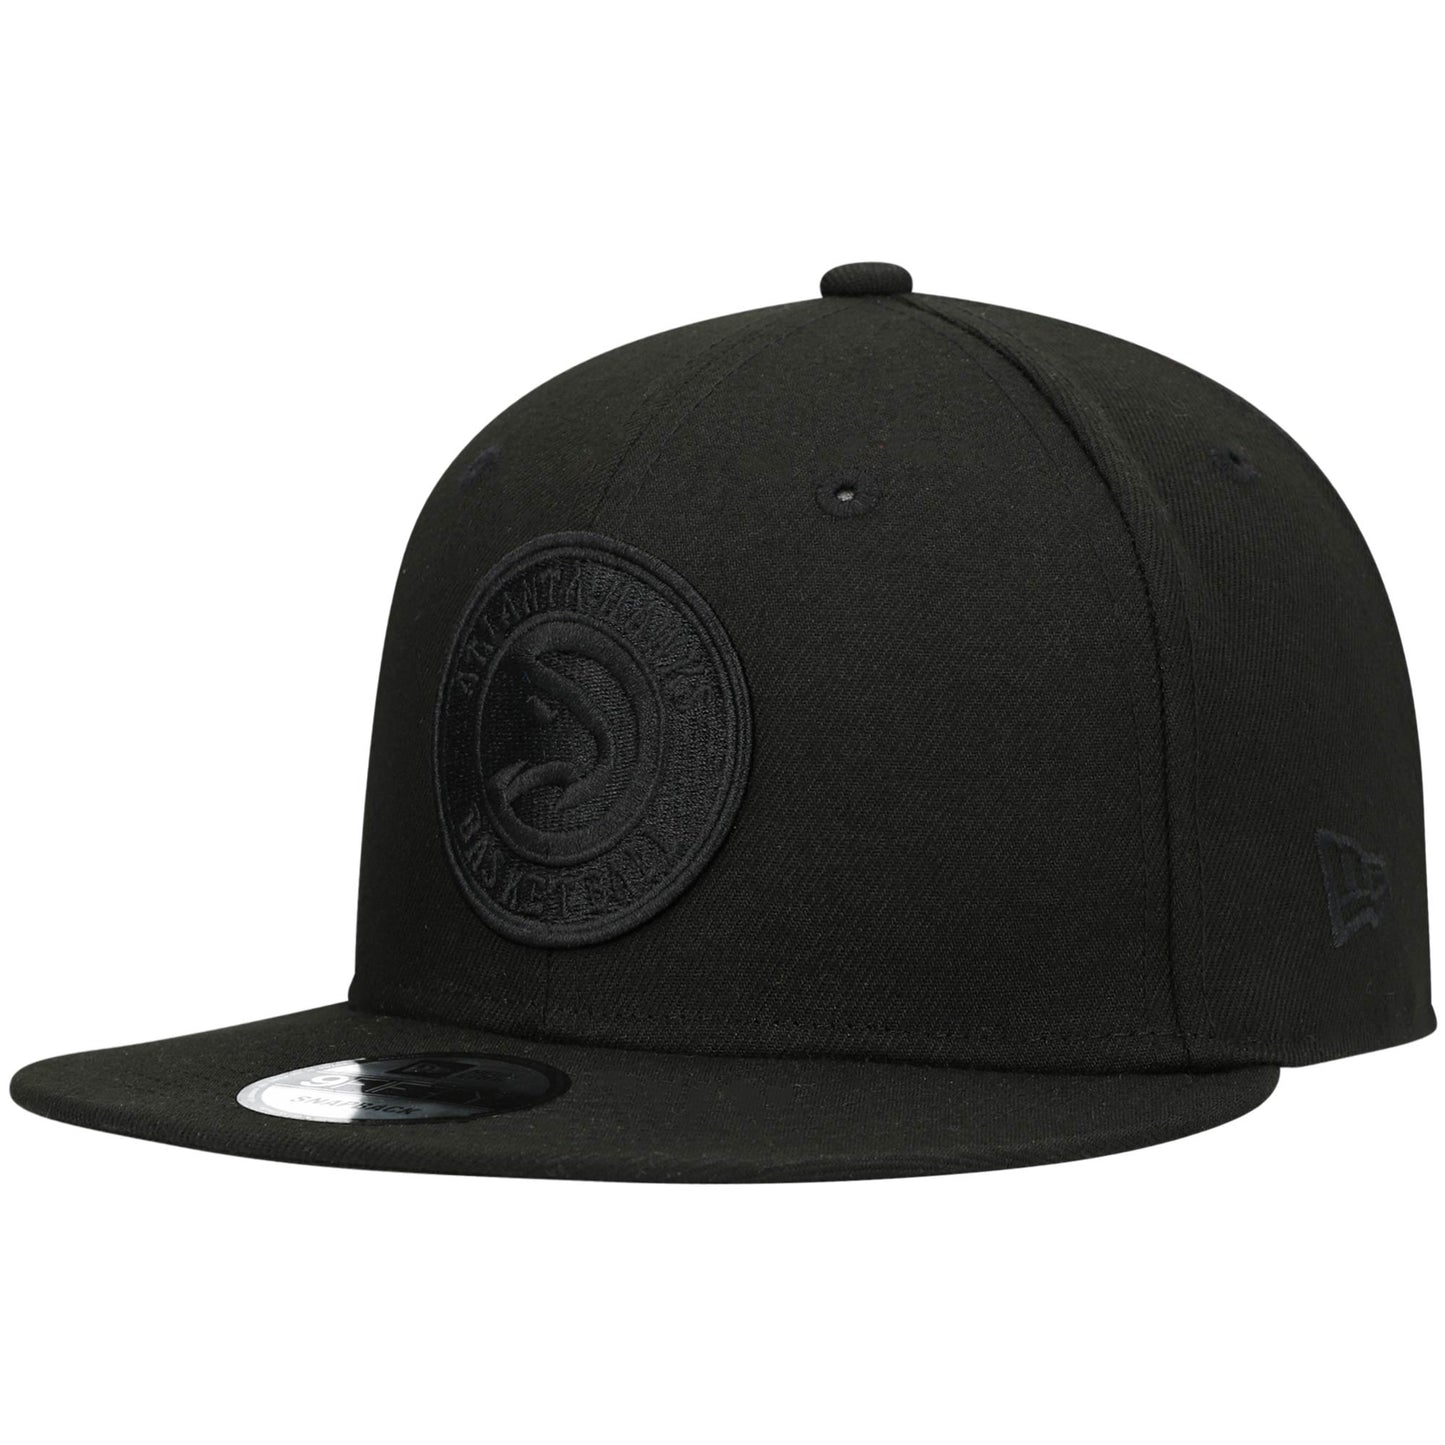 Atlanta Hawks New Era Black On Black 9FIFTY Snapback Hat